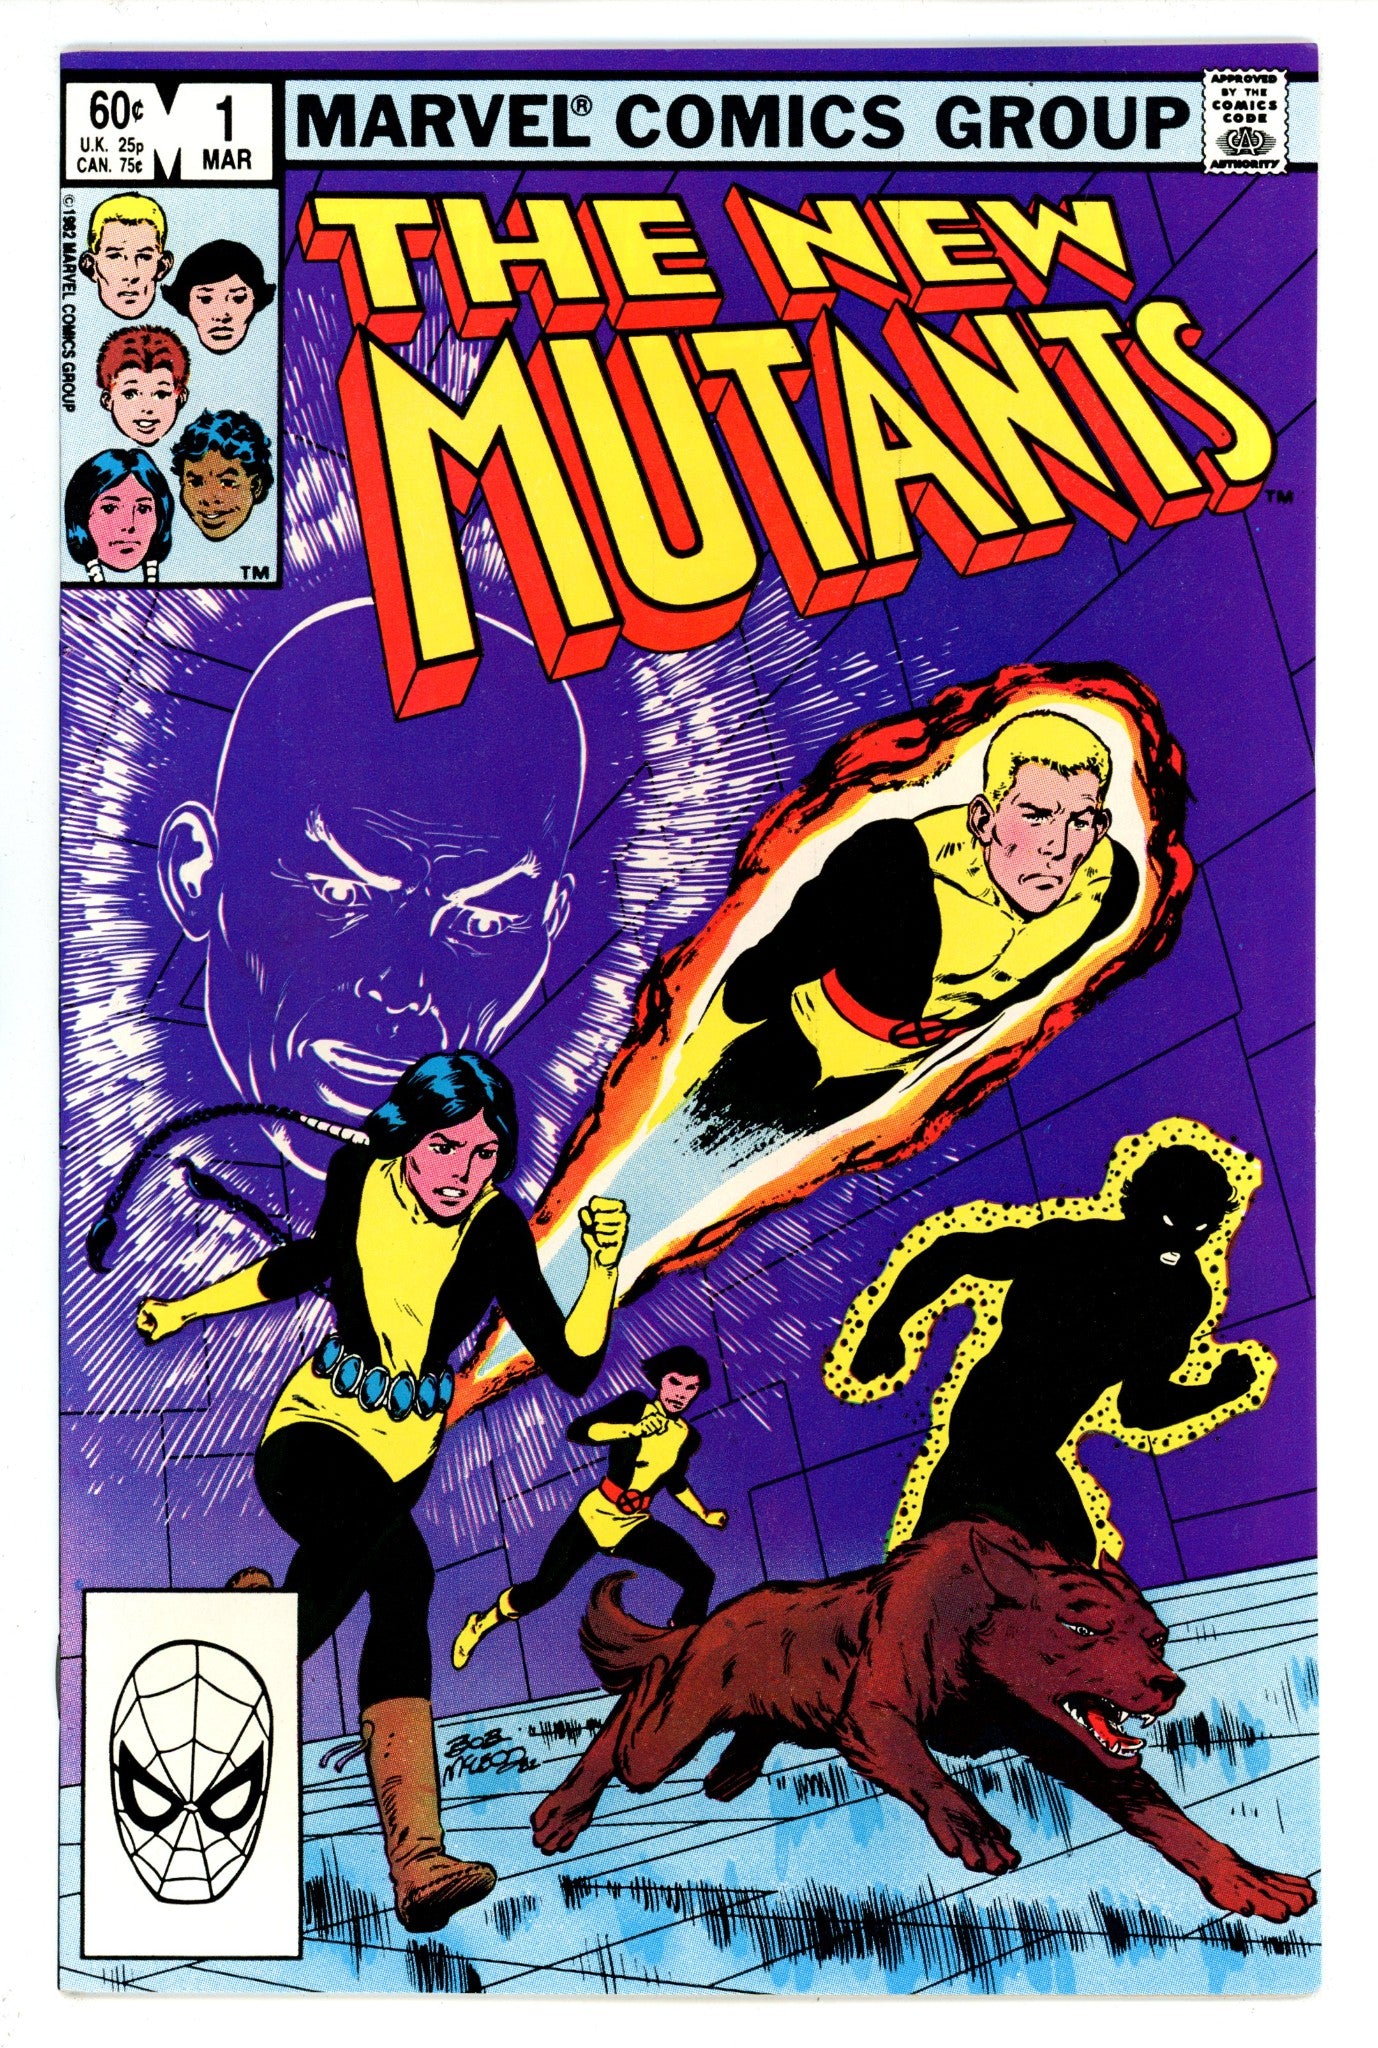 The New Mutants Vol 1 1 VF/NM (9.0) (1983) 